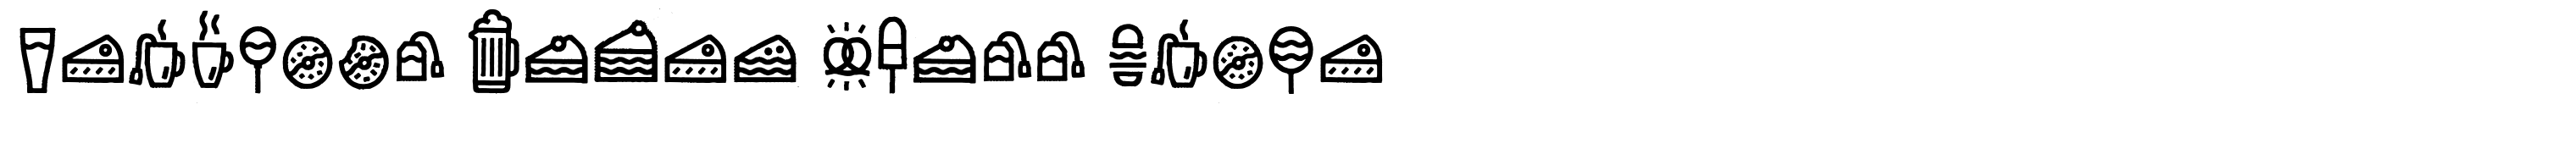 Escalope Crust Three Icons